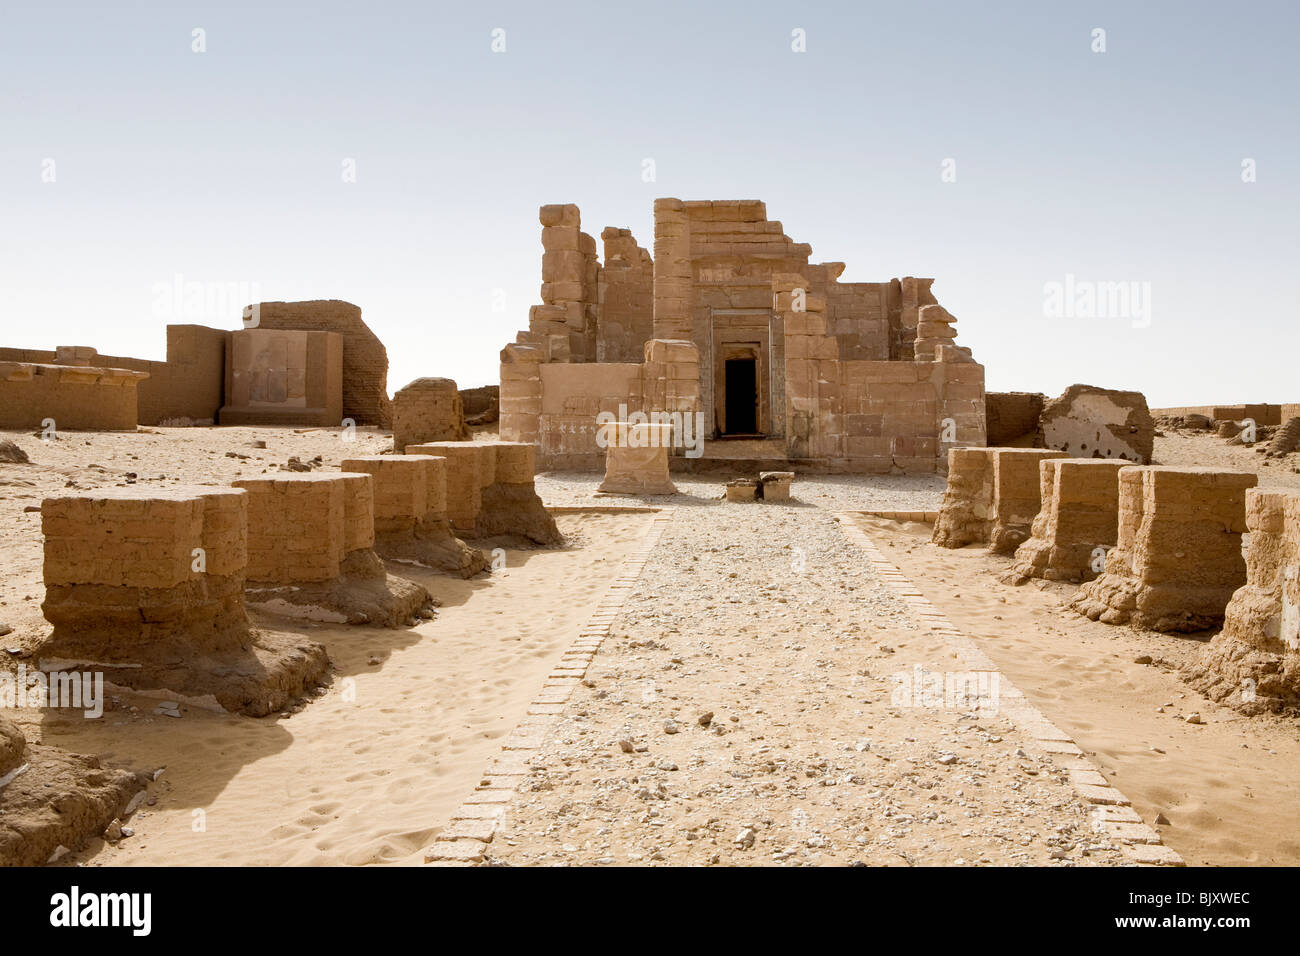 The Roman Temple of Deir el Hagar, Monastery of Stone, Dakhla Oasis, Western Desert of Egypt Stock Photo